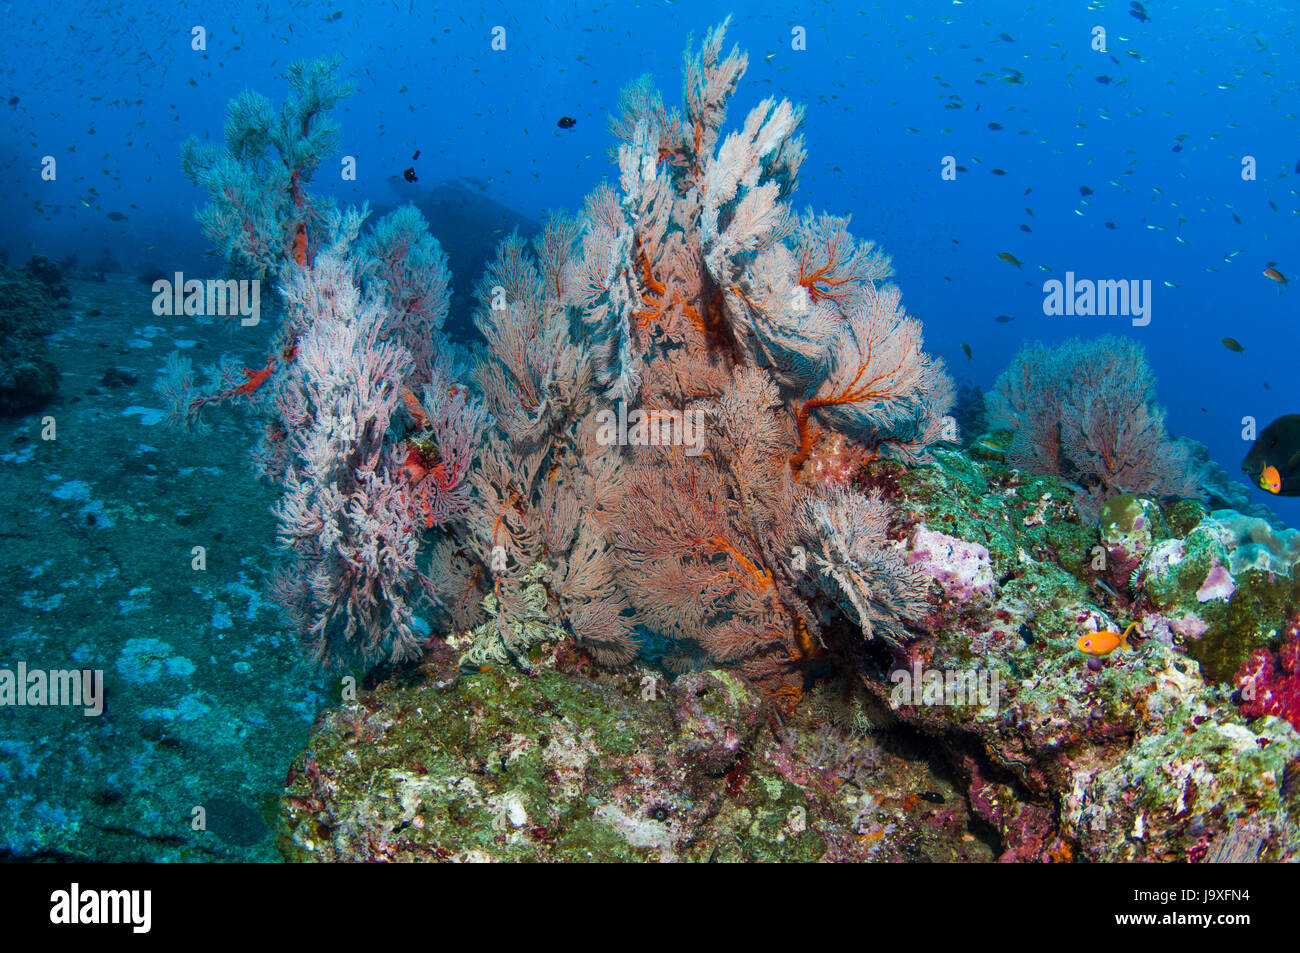 Sea fan gorgones [Melithaea sp.] îles Similan, la mer d'Andaman, en Thaïlande. Banque D'Images